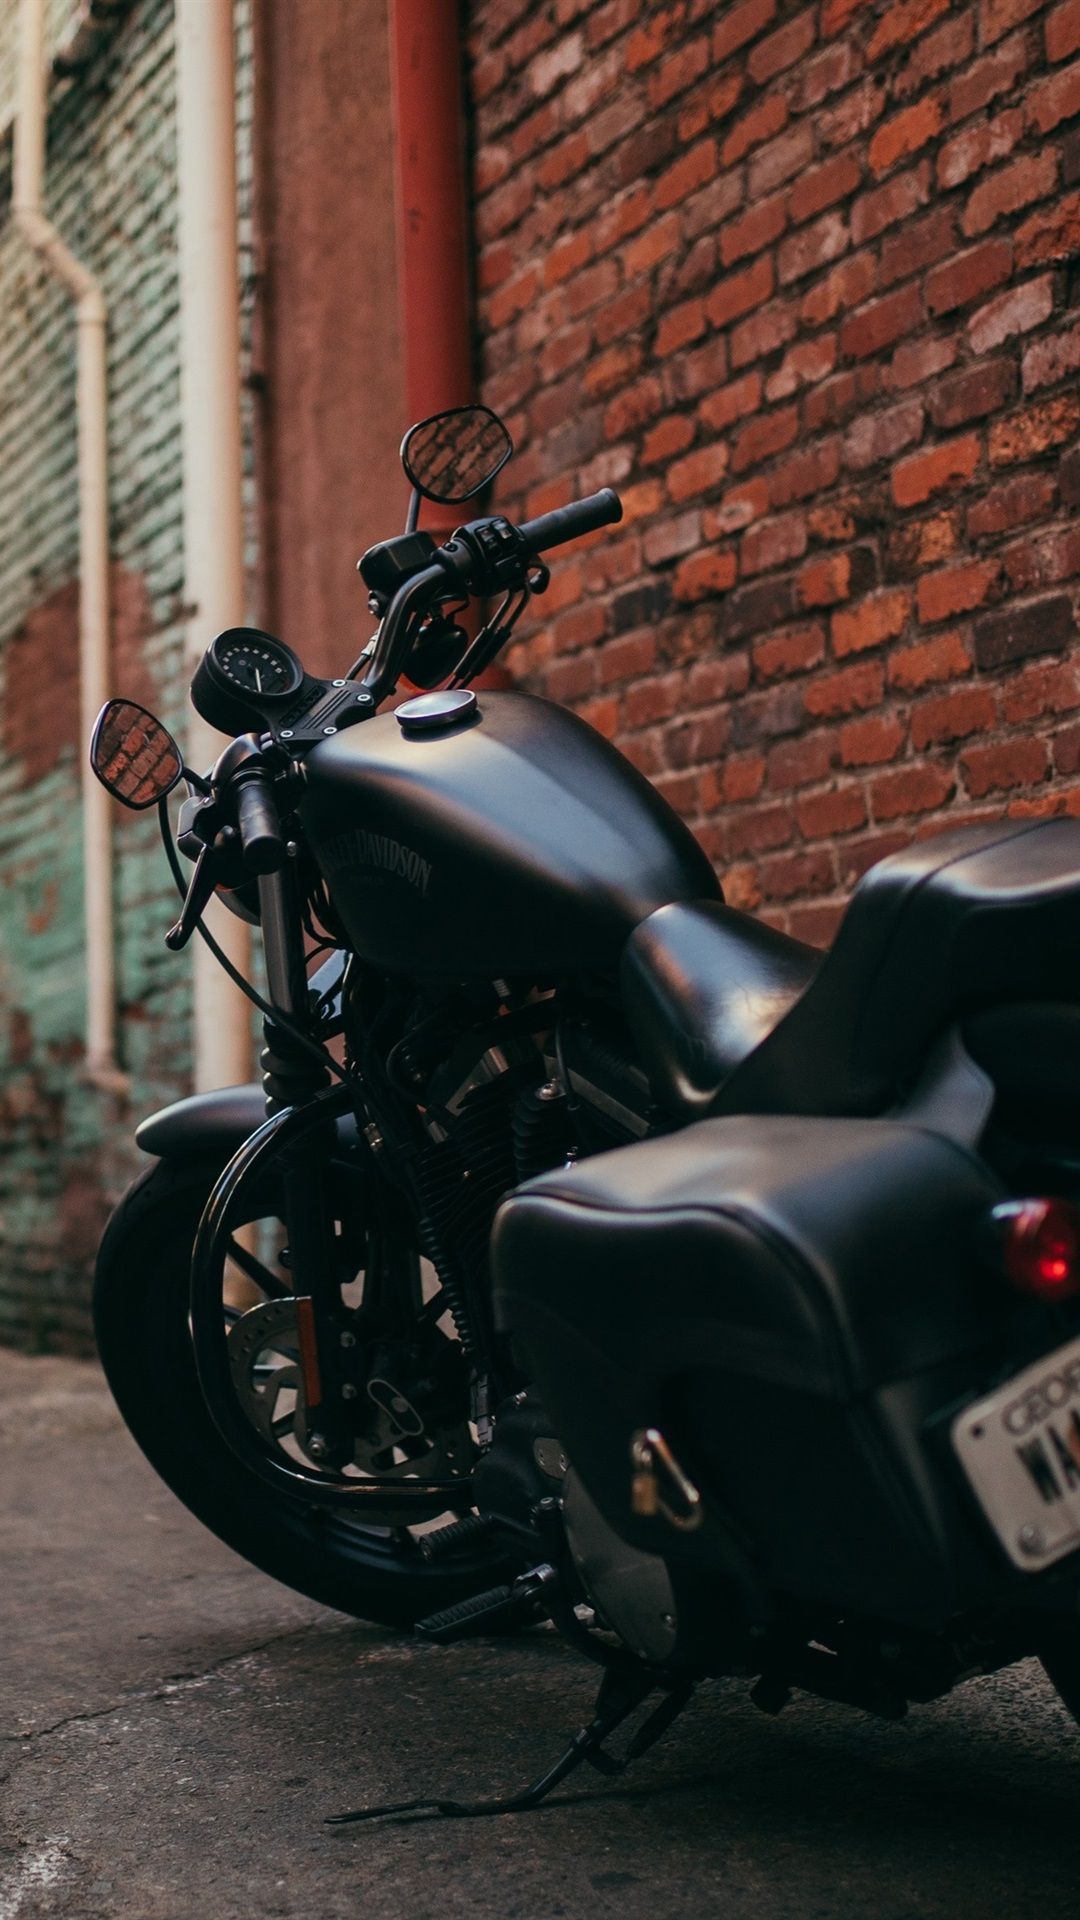 Harley Davidson black motorcycle back view, path 1080x1920 iPhone